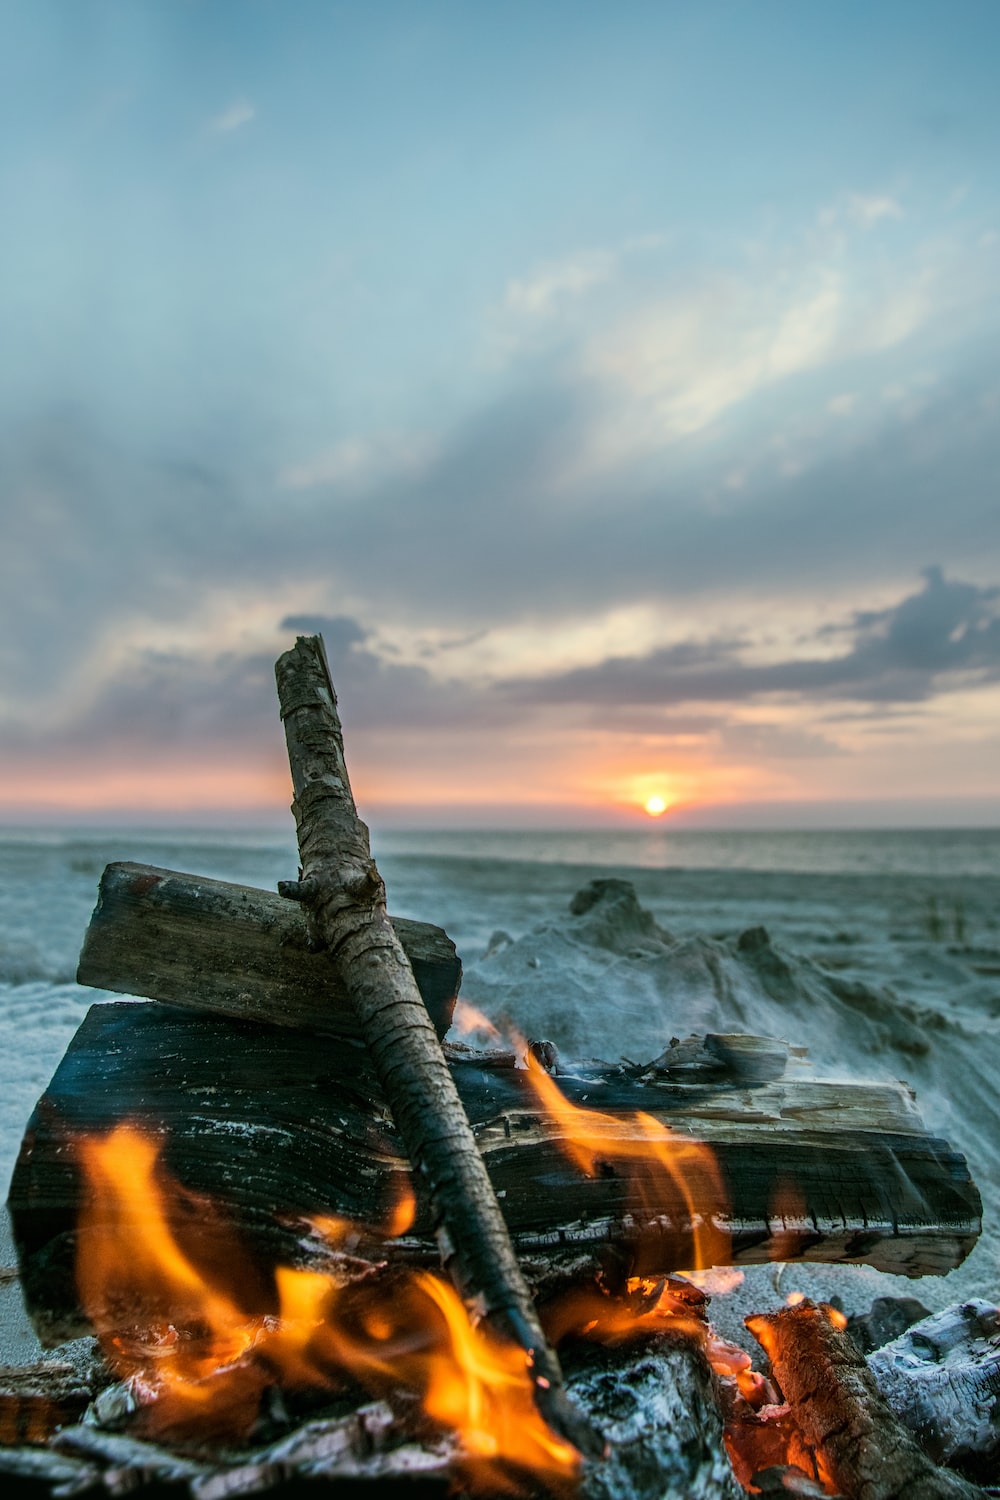 Beach Bonfire Picture. Download Free Image